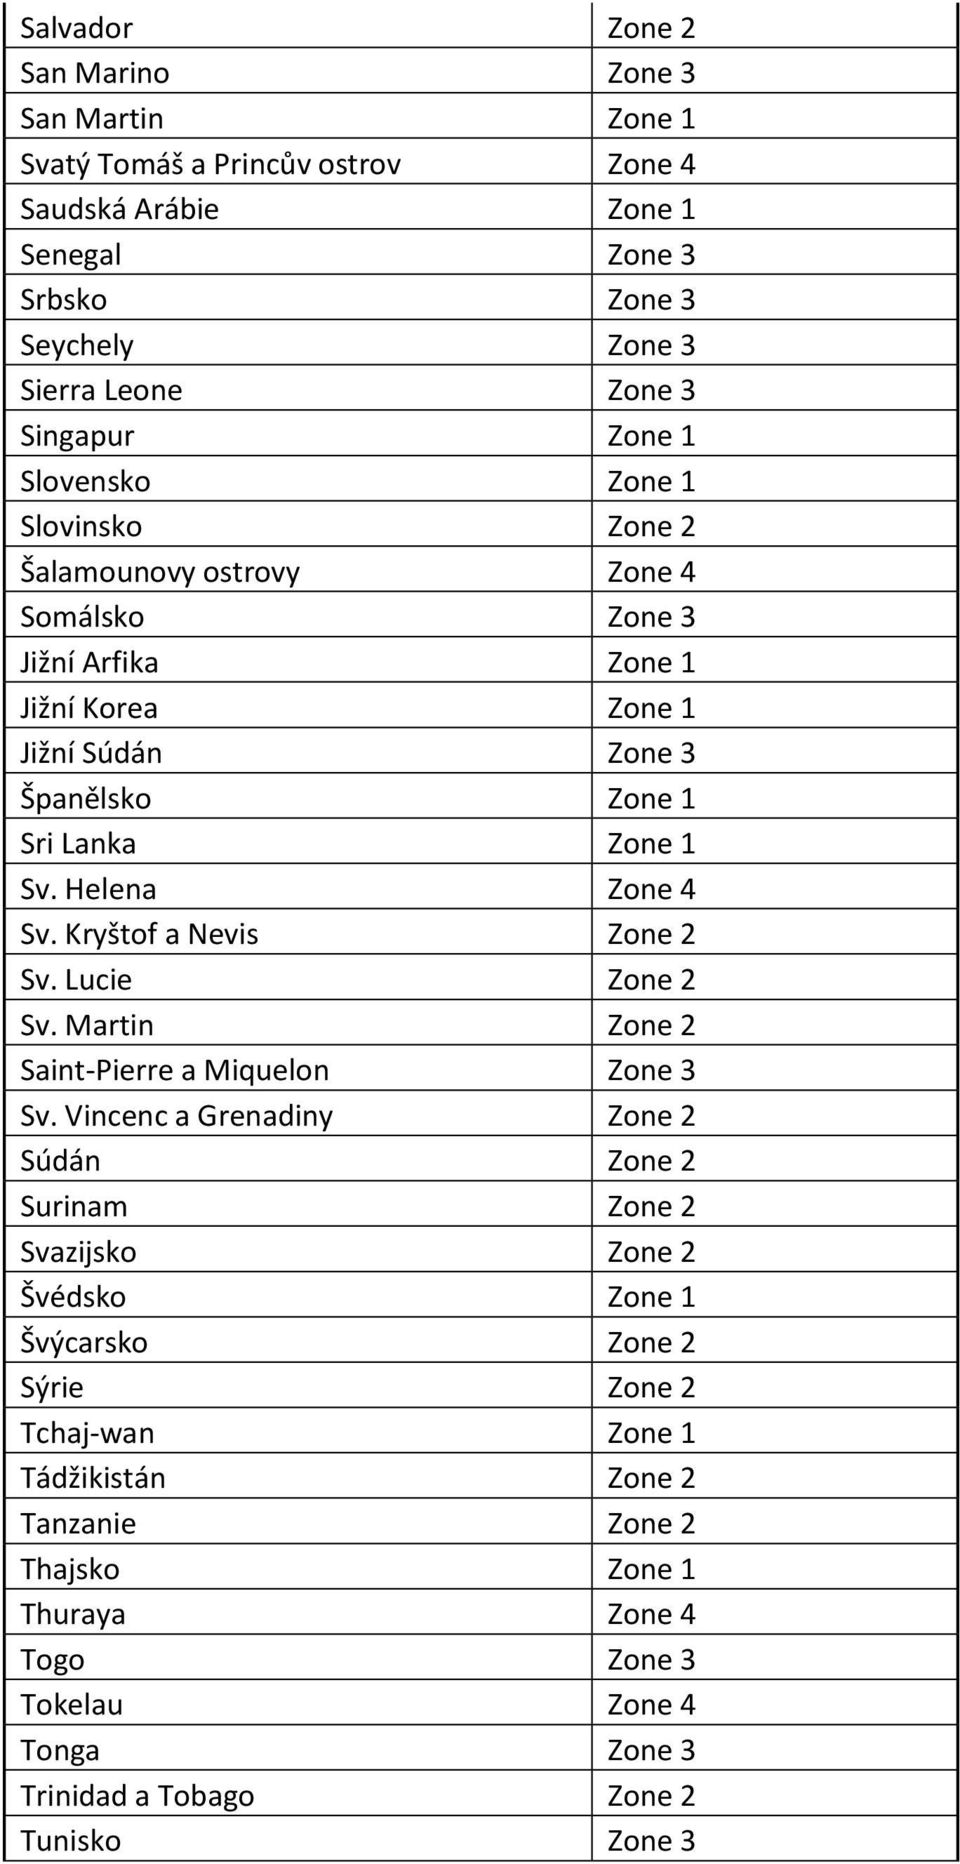 Helena Zone 4 Sv. Kryštof a Nevis Zone 2 Sv. Lucie Zone 2 Sv. Martin Zone 2 Saint-Pierre a Miquelon Zone 3 Sv.